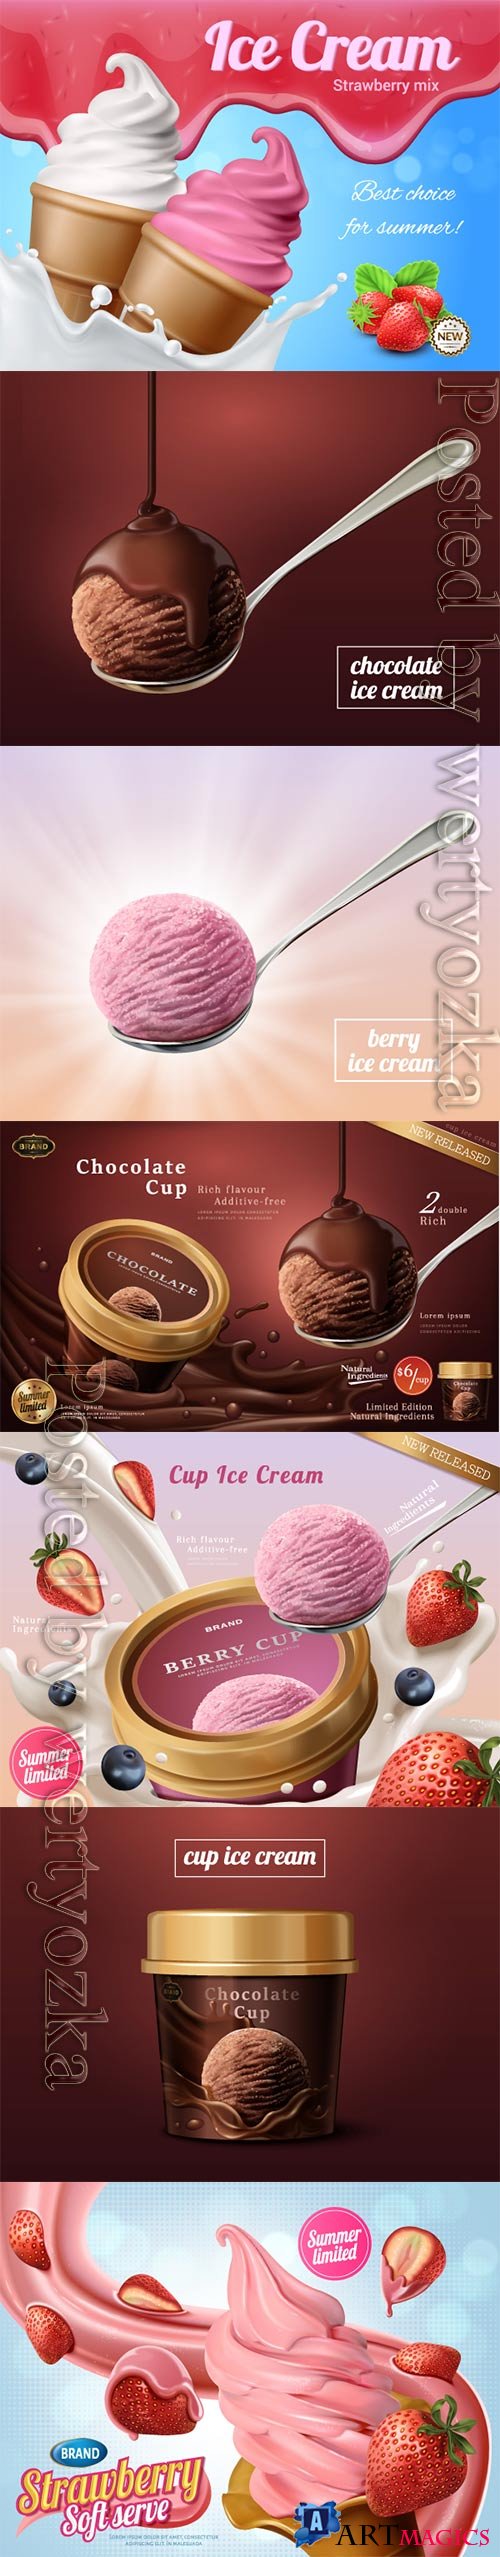 Ice cream advertisement vector collection